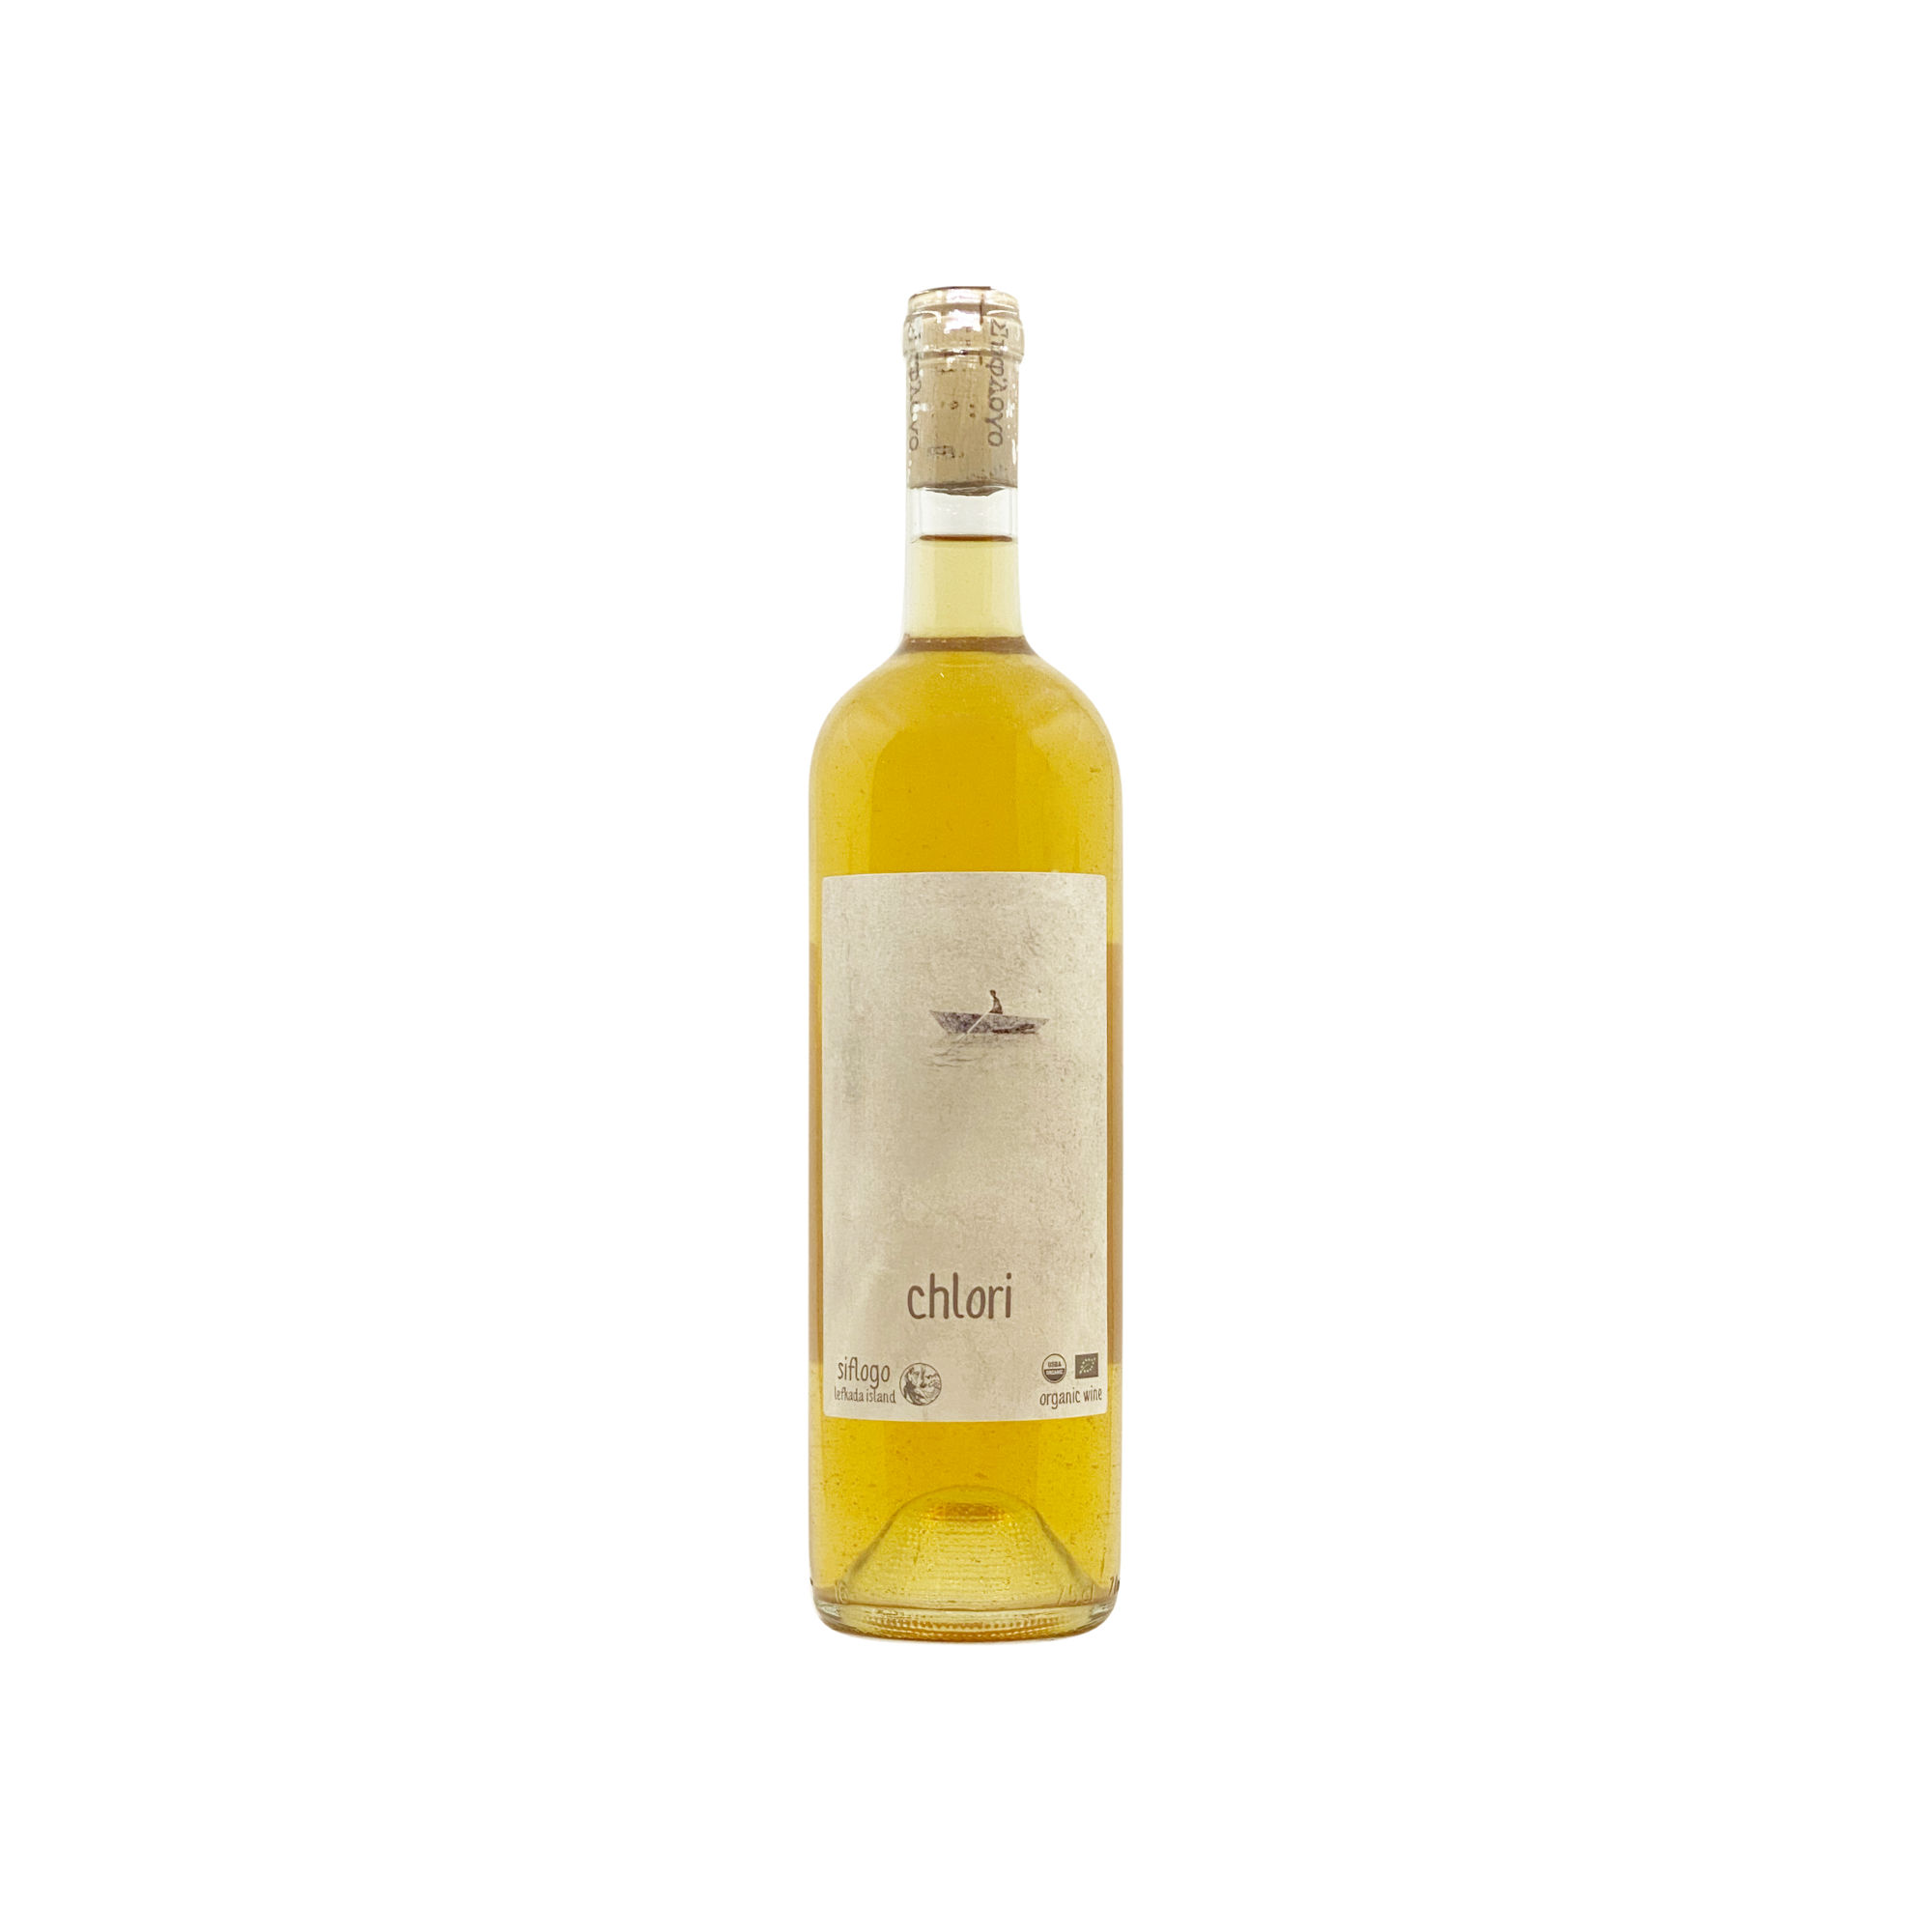 Siflogo - Lefkada Island - Ionian sea - Chlori - Orange natural wine with zero added sulfites - ORGANIC wine - Eklektikon - Greek wine